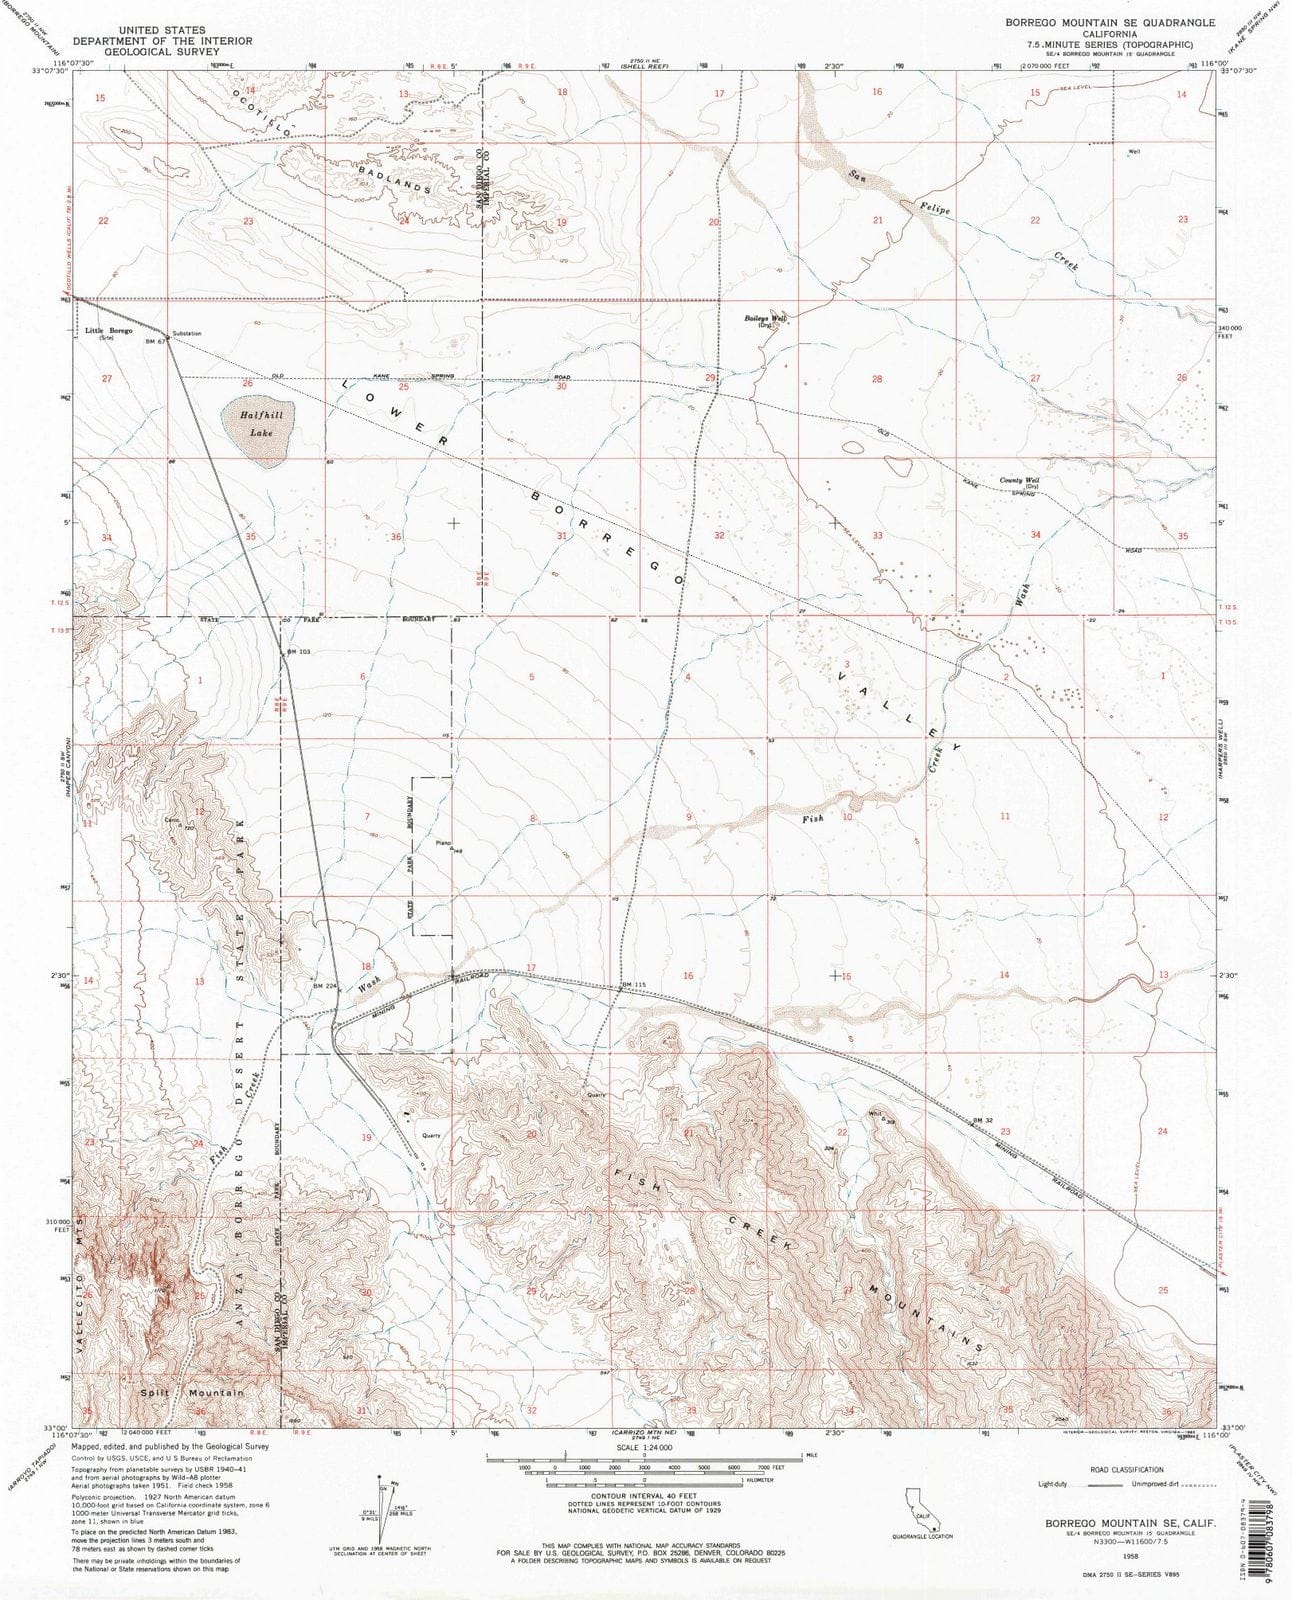 1958 Borrego Mountain, CA - California - USGS Topographic Map ...